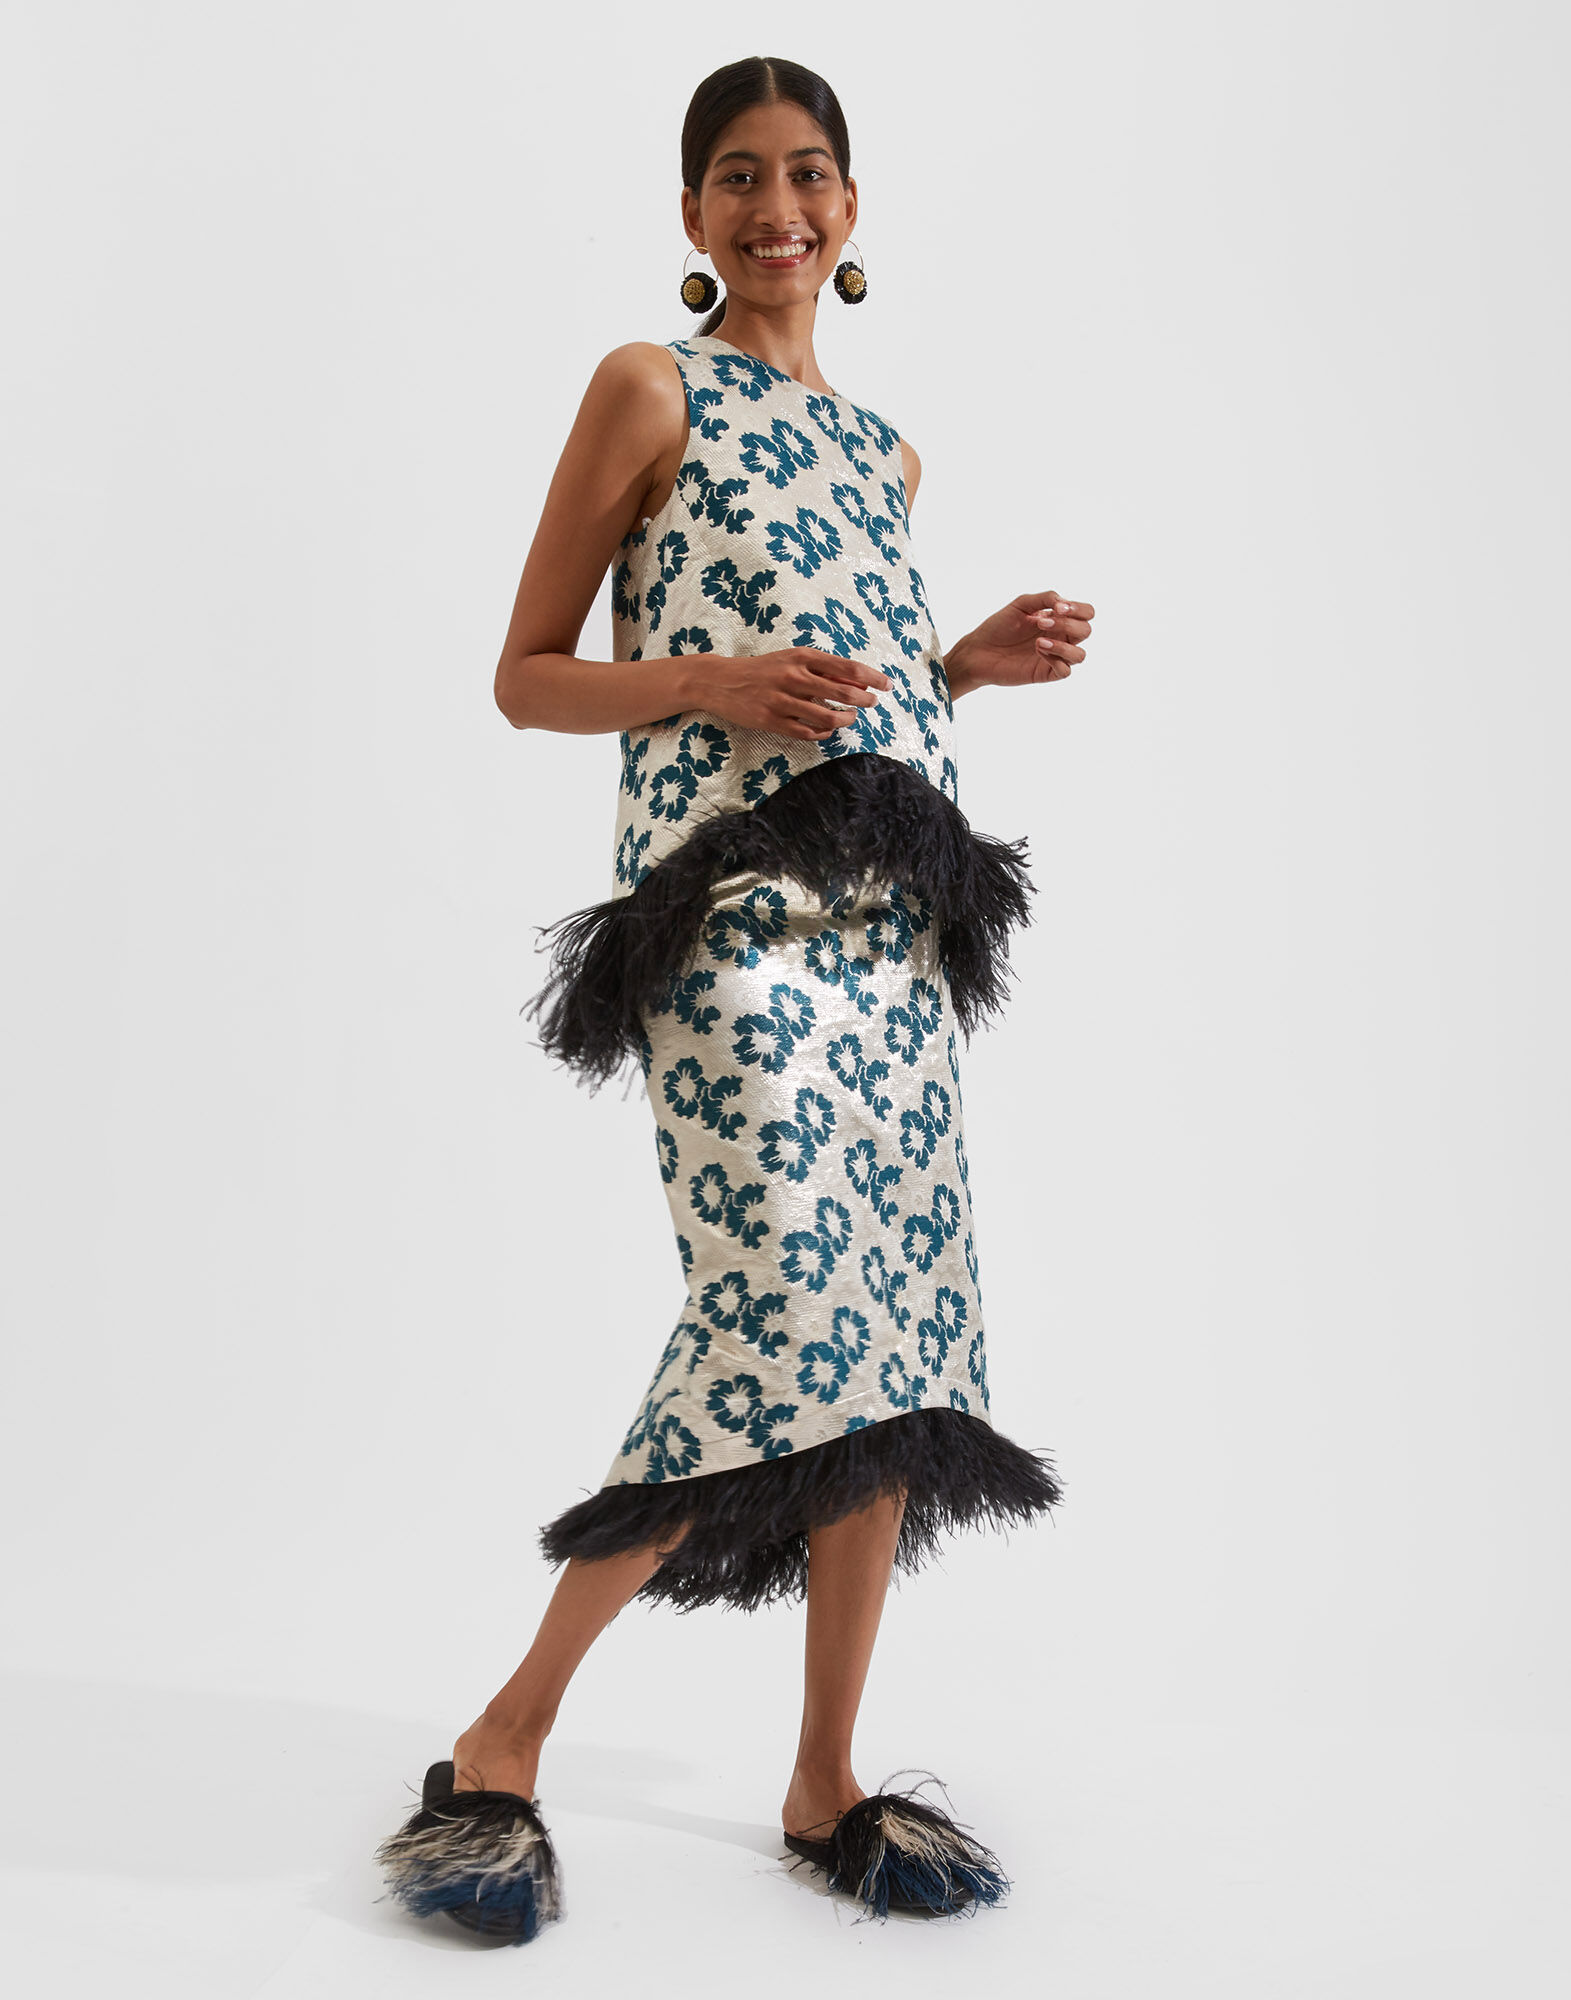 Buy Desigual Women's Floral Jacquard Skirt, Marino, 2 at Amazon.in